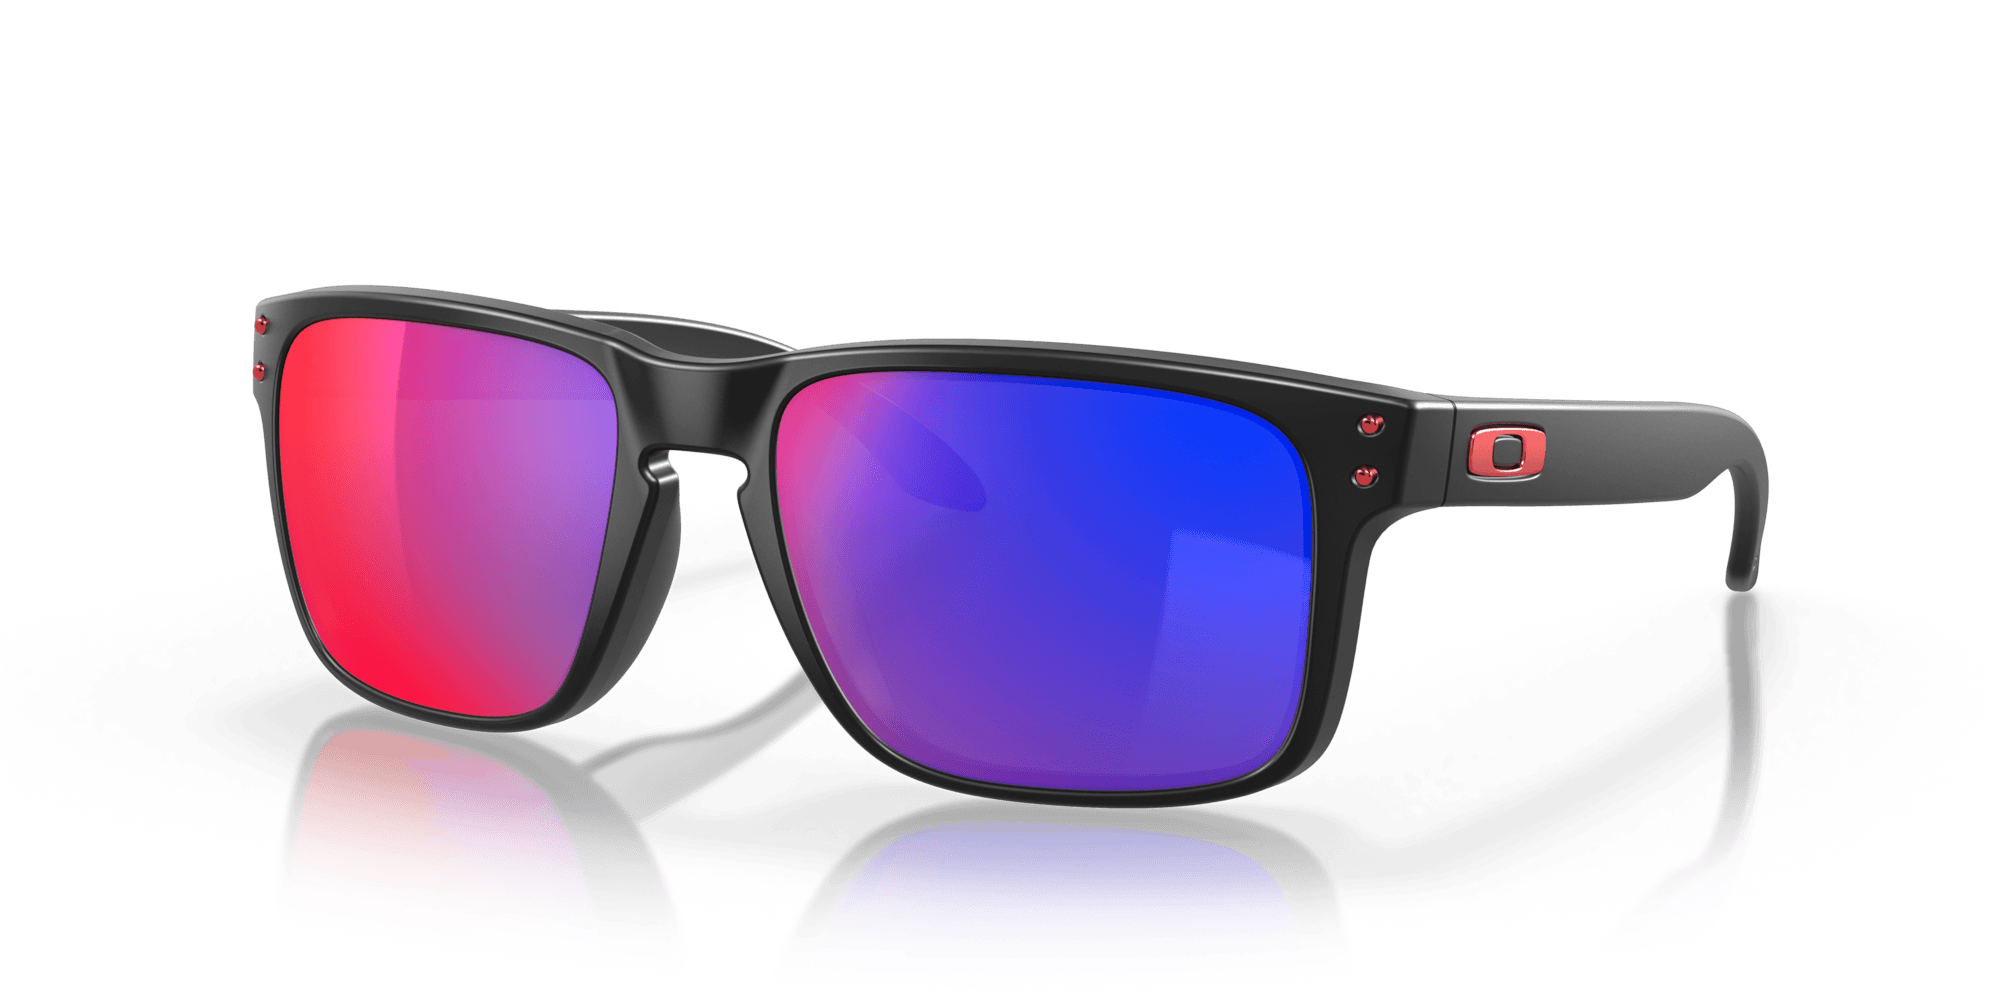 Holbrook Sunglasses - Matte Black/Red Iridium Lenses - Purpose-Built / Home of the Trades